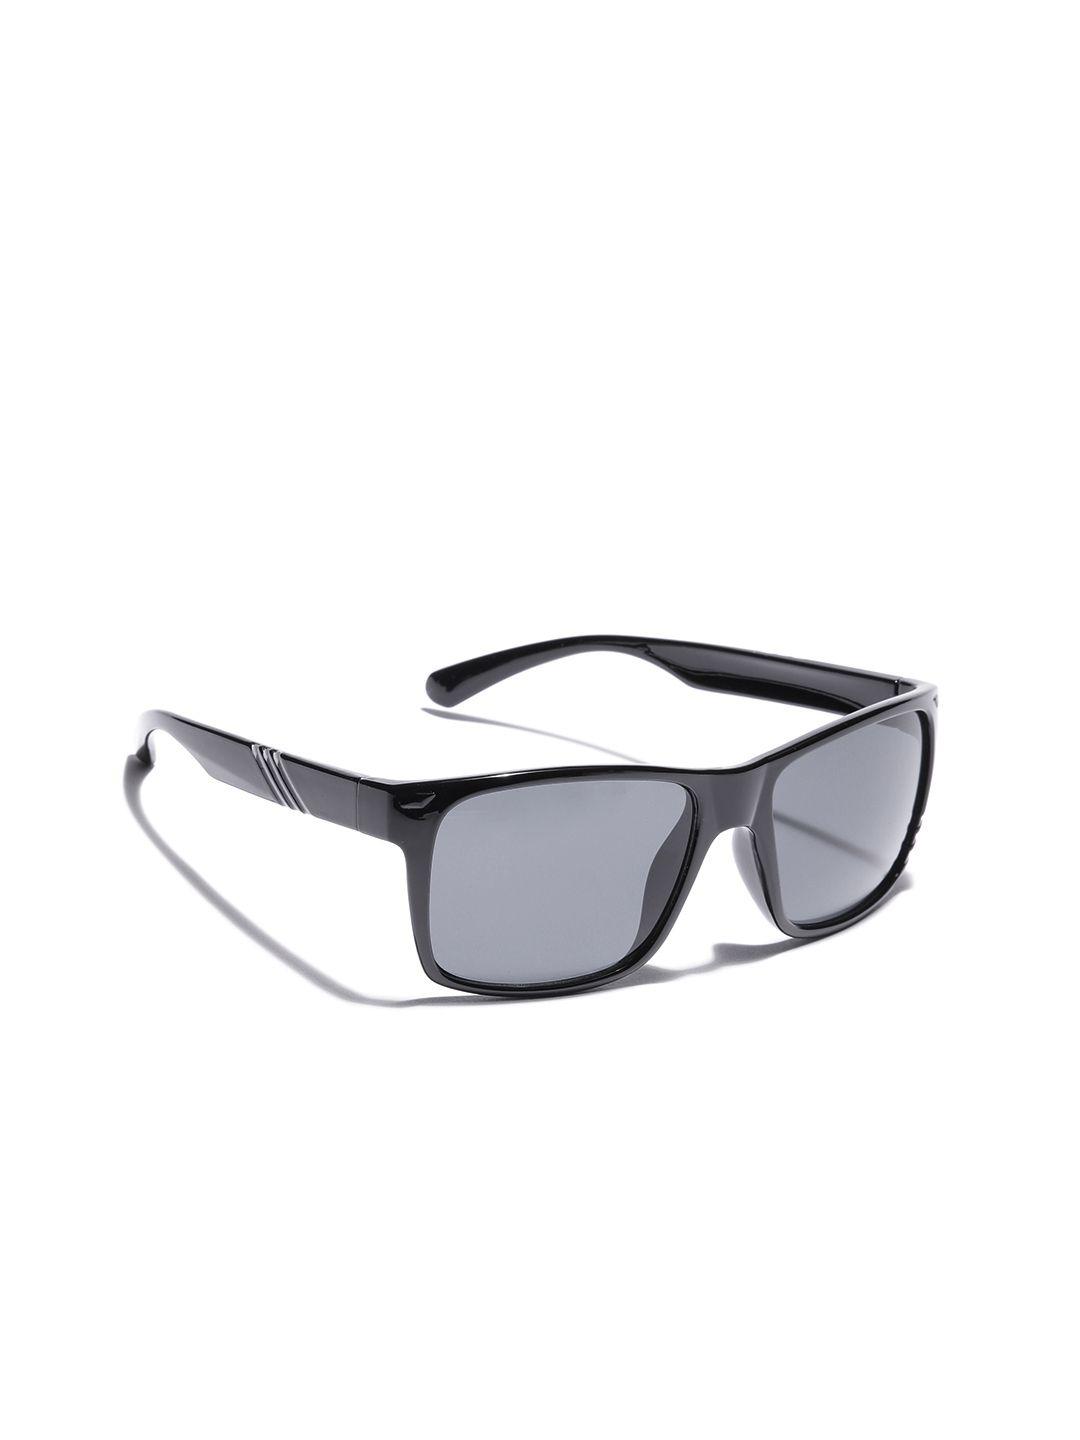 carlton london men black lens rectangle sunglasses with uv protected lens clsm269